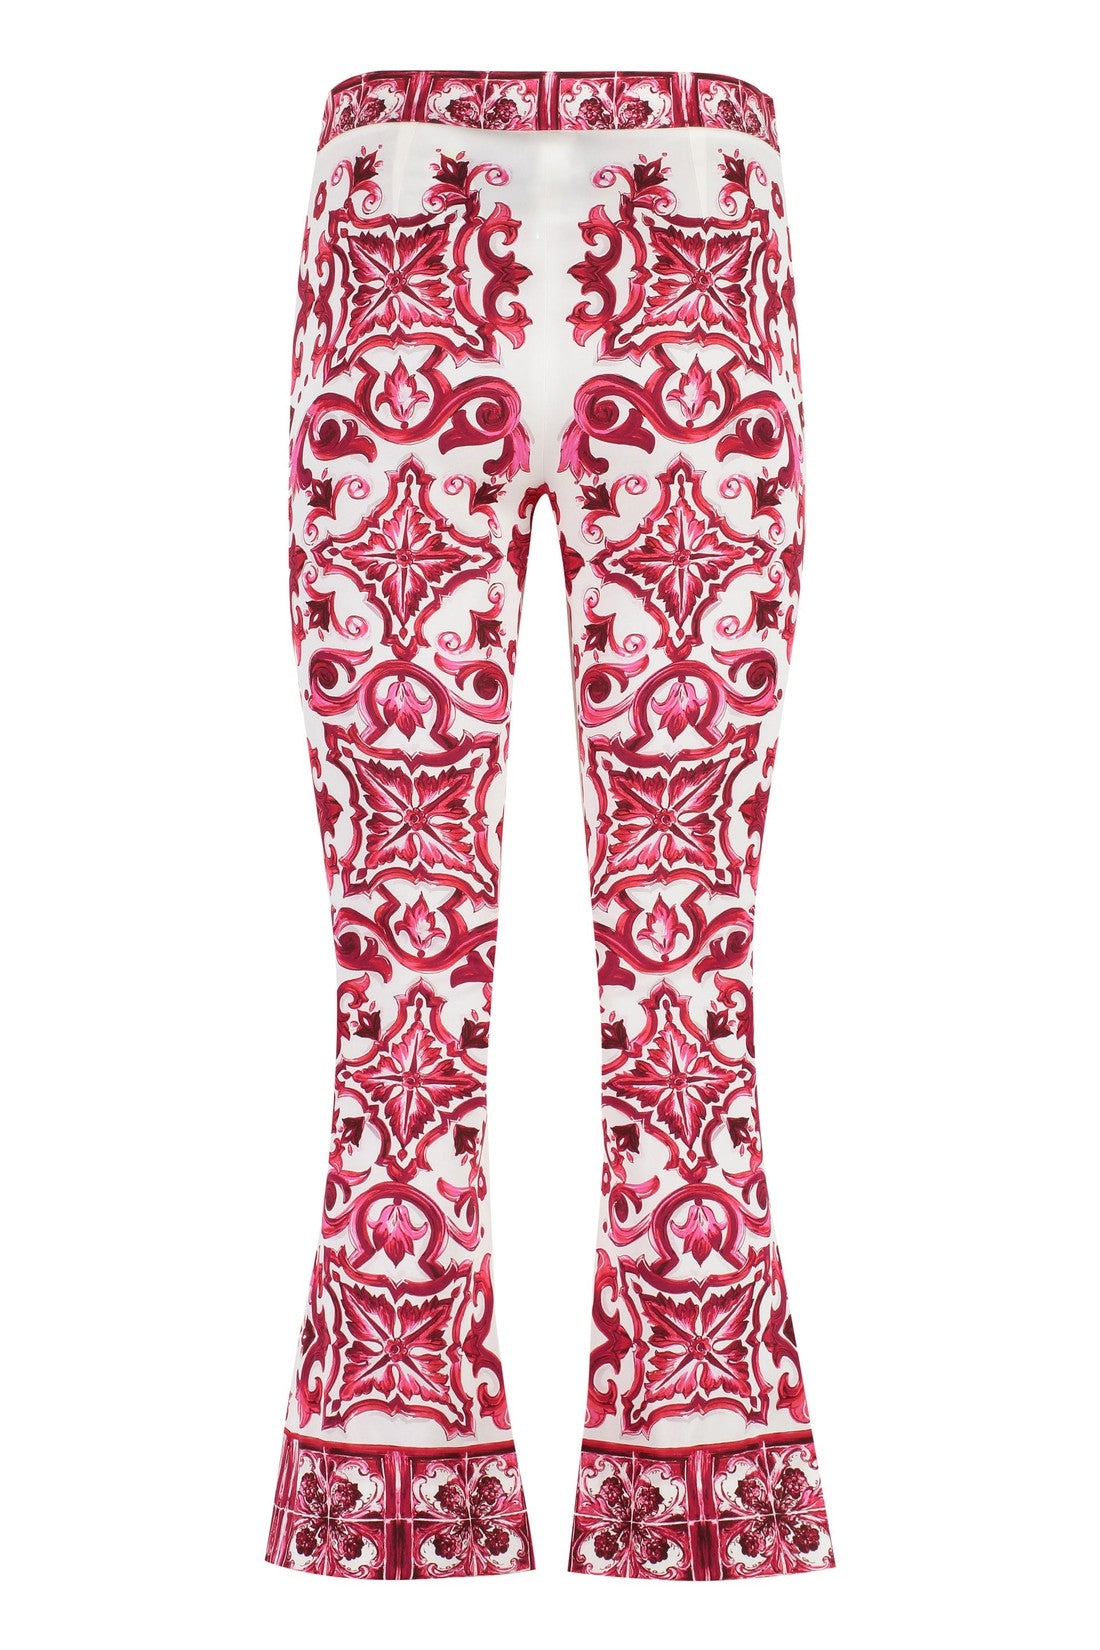 Dolce & Gabbana-OUTLET-SALE-Printed silk pants-ARCHIVIST